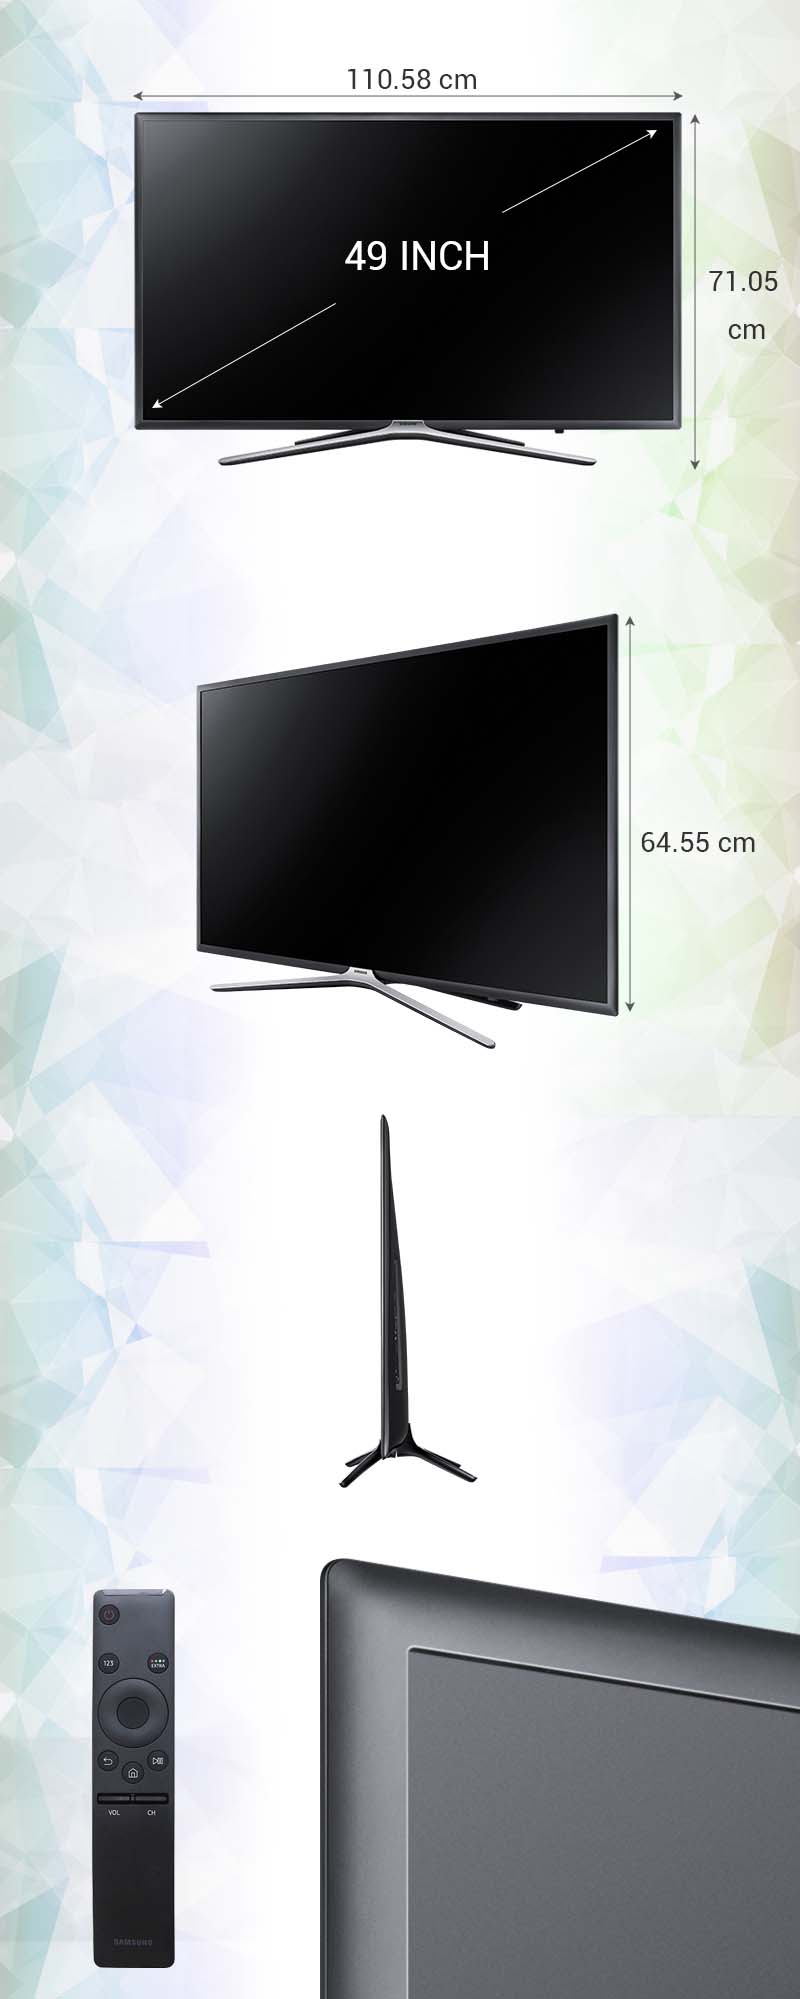 Smart Tivi Samsung 49 inch UA49K5500 - Kích thước TV